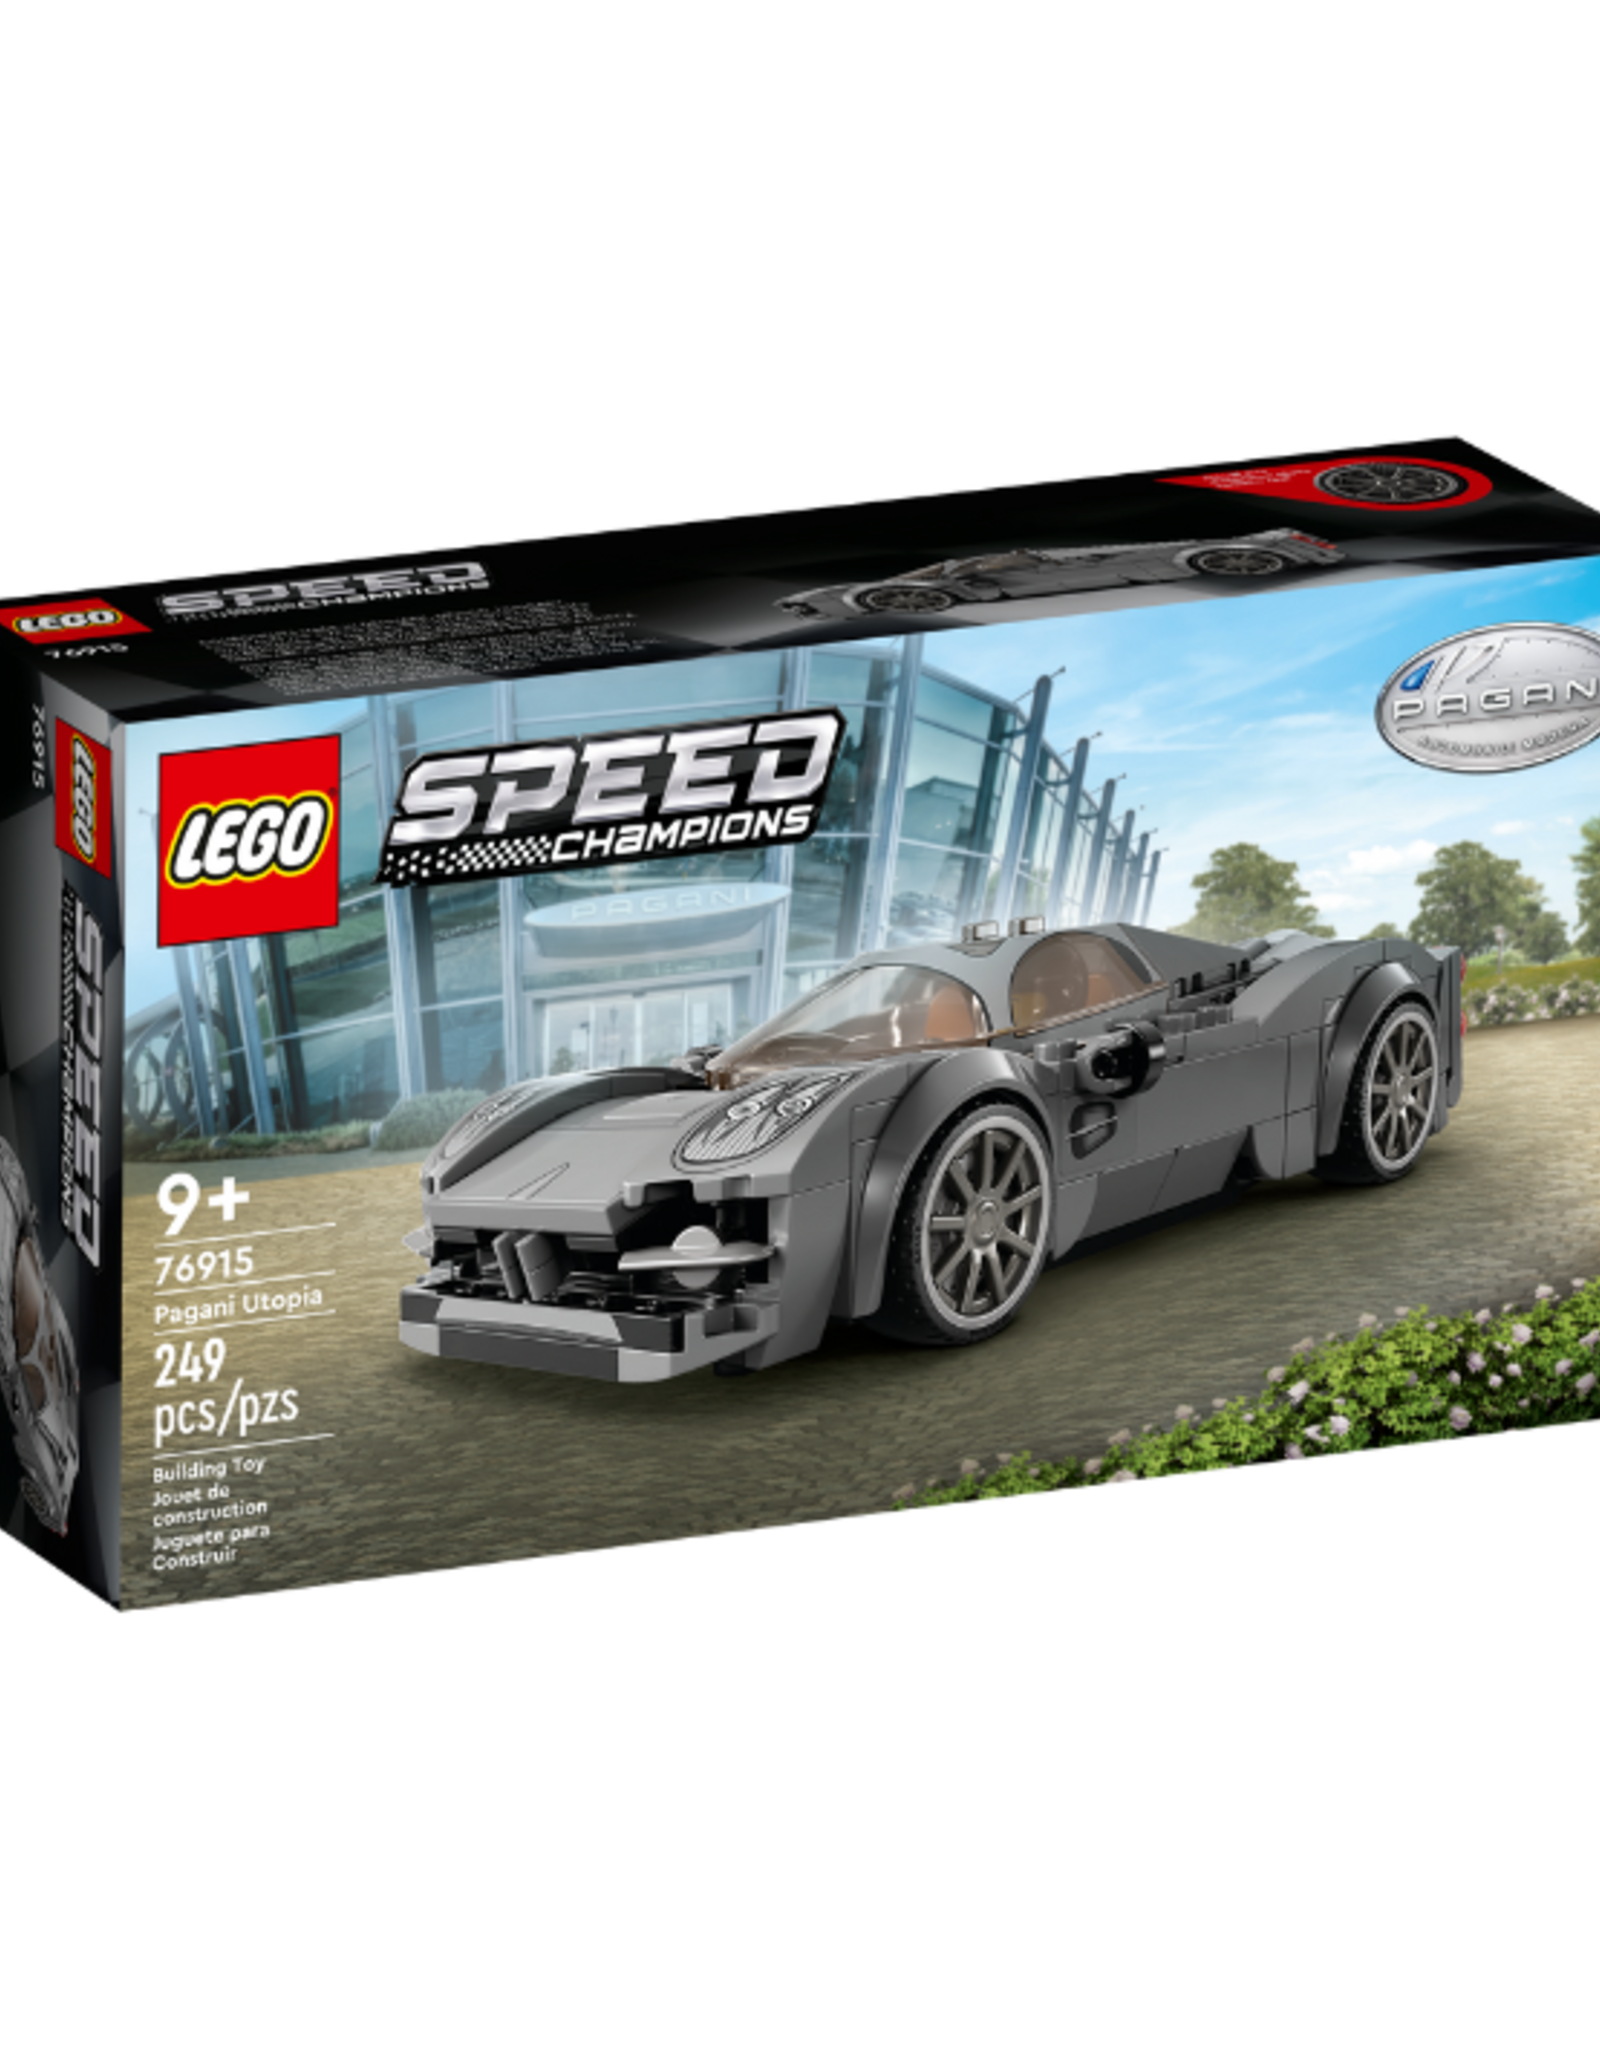 Lego Lego - Speed Champions - 76915 - Pagani Utopia